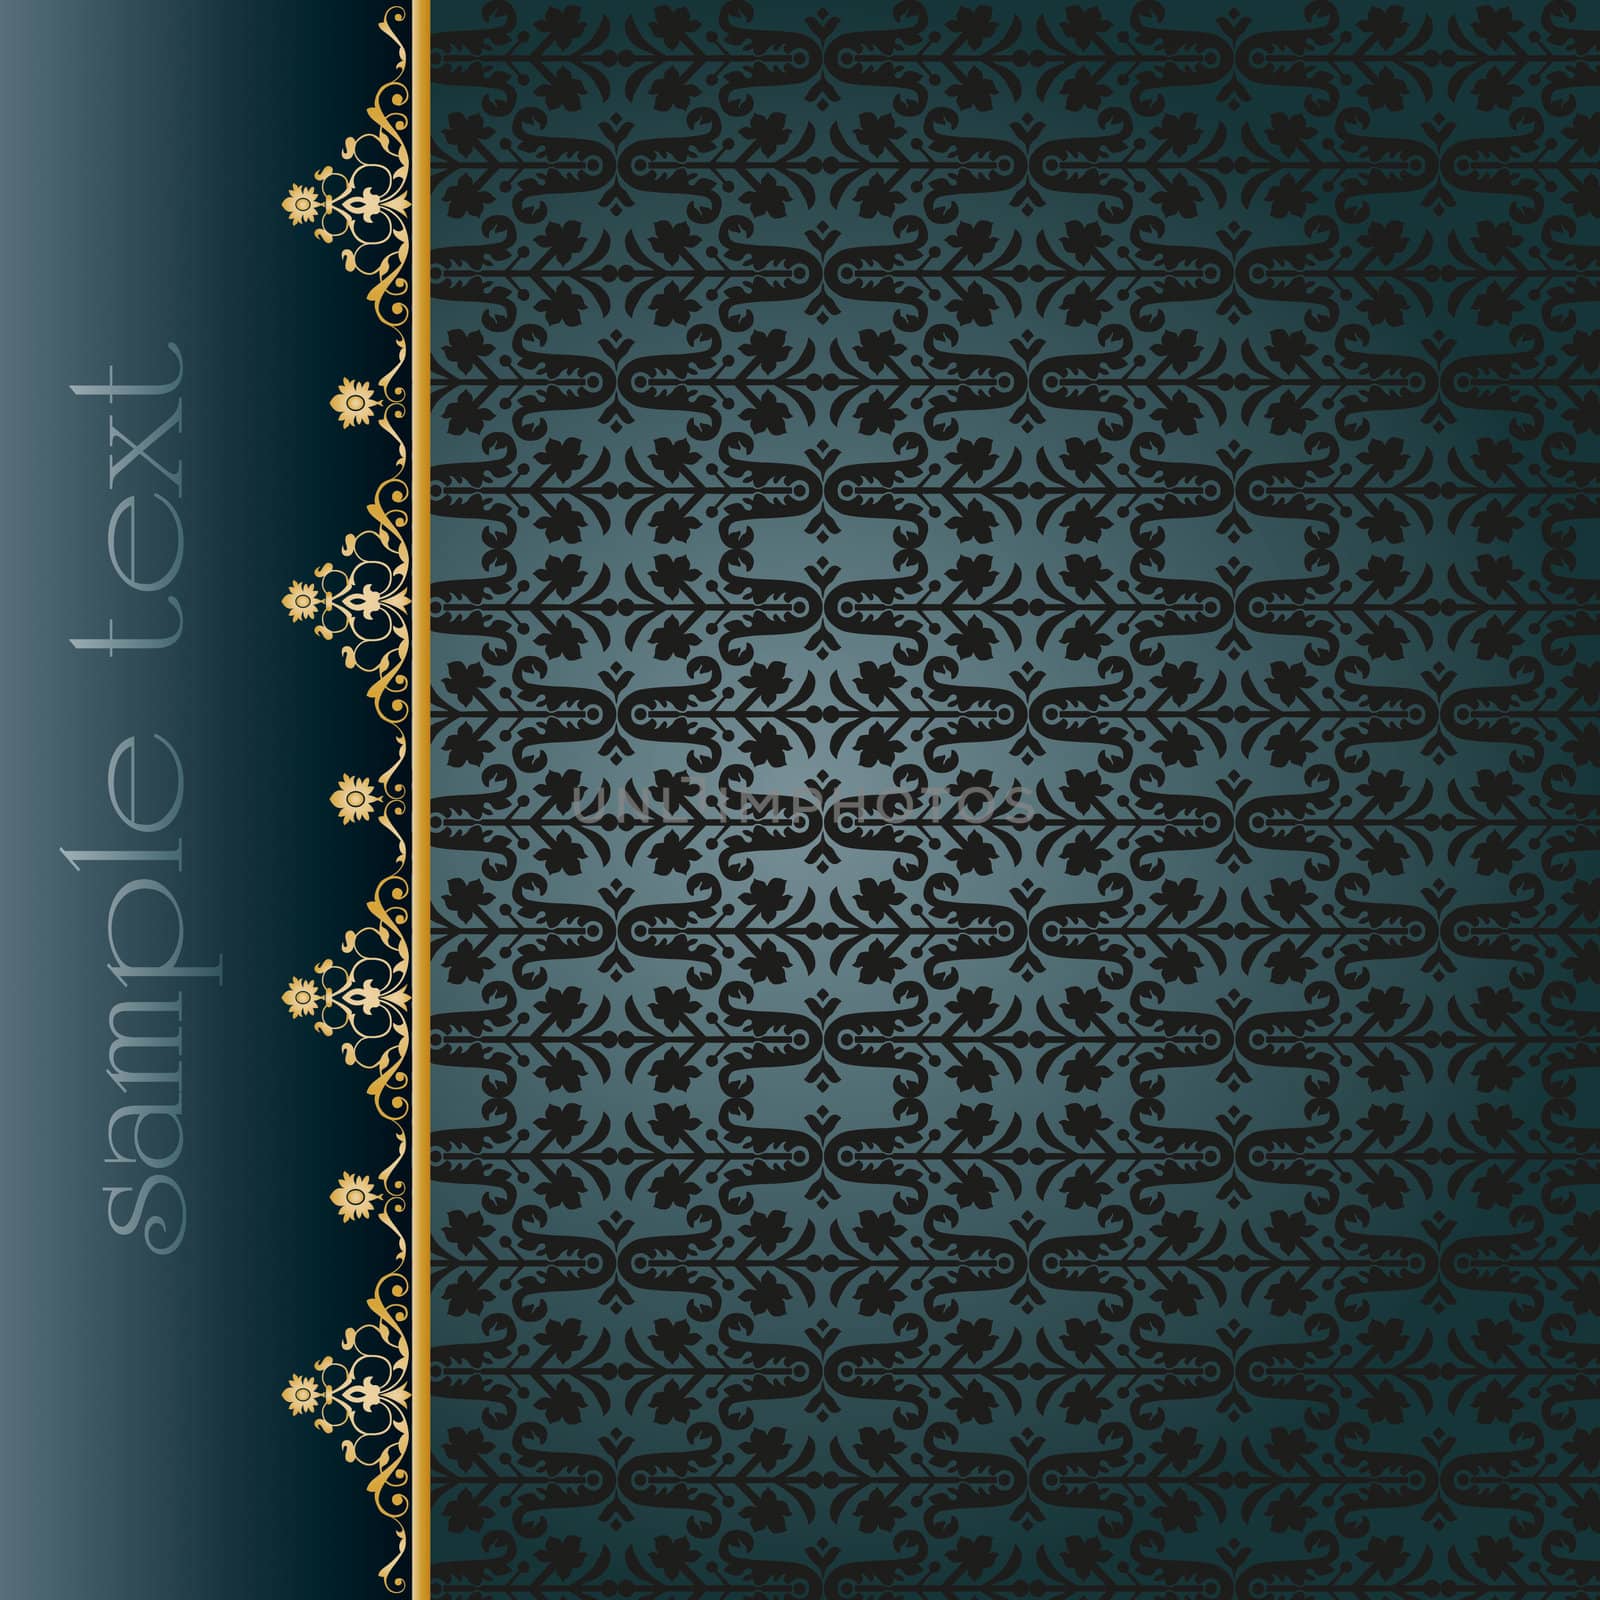 traditional ottoman pattern by antsvgdal